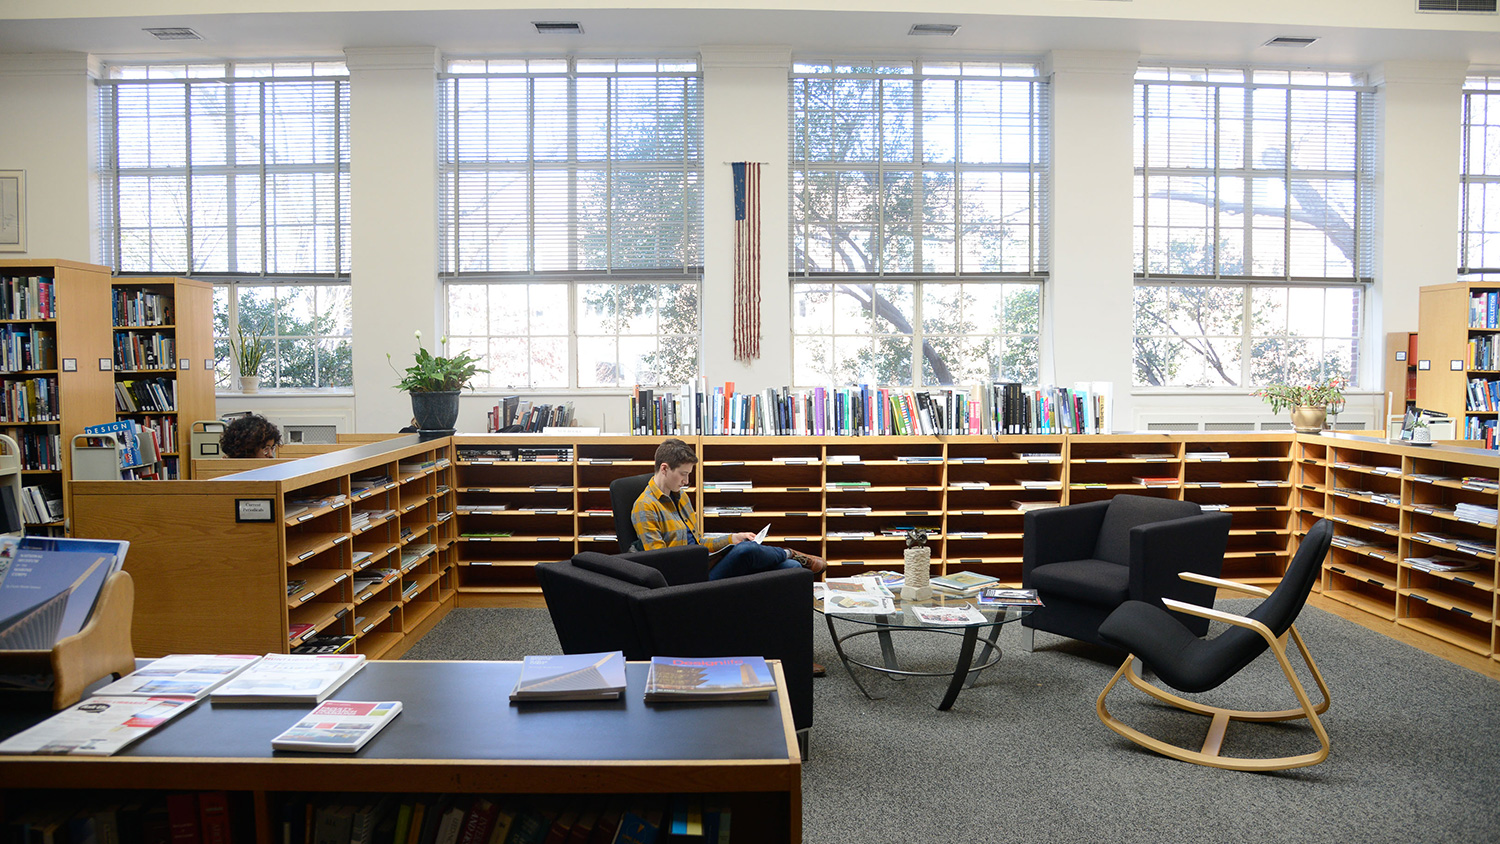 Interior shot of Design library